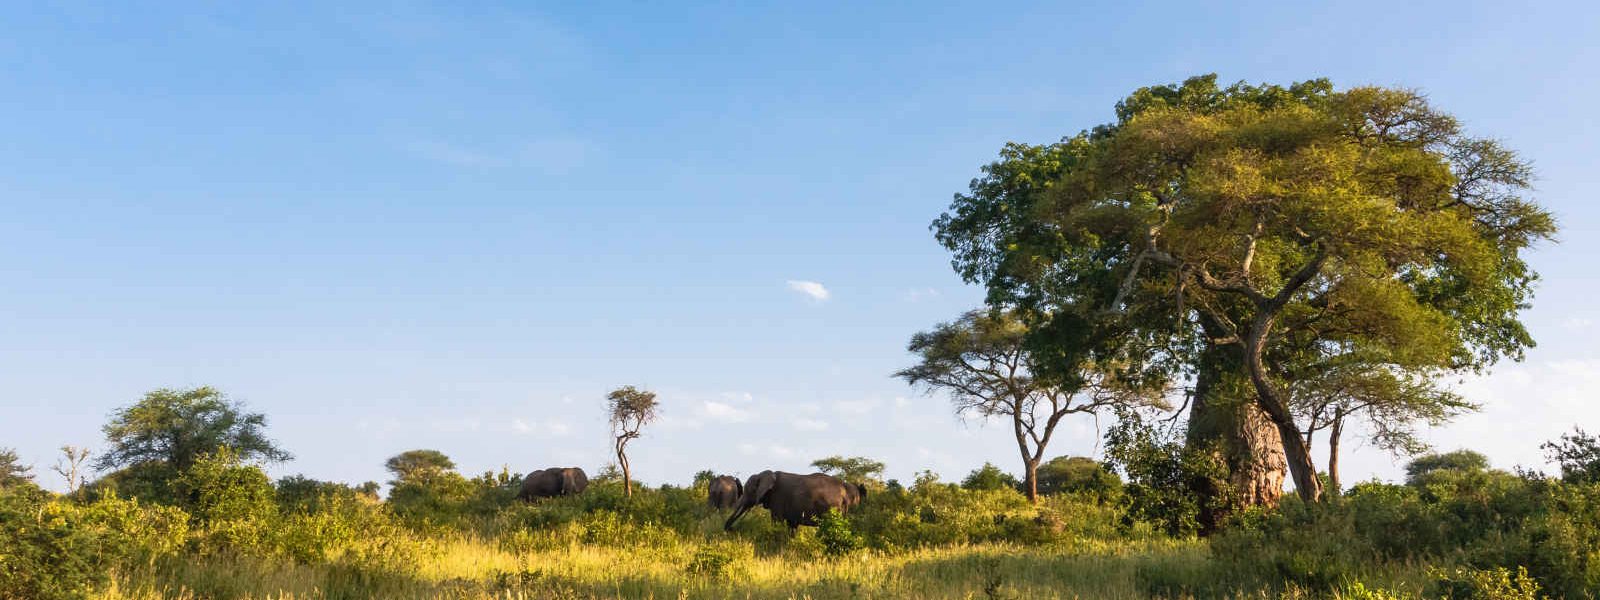 Elephants et Baobab, Parc de Tarangire, Tanzanie